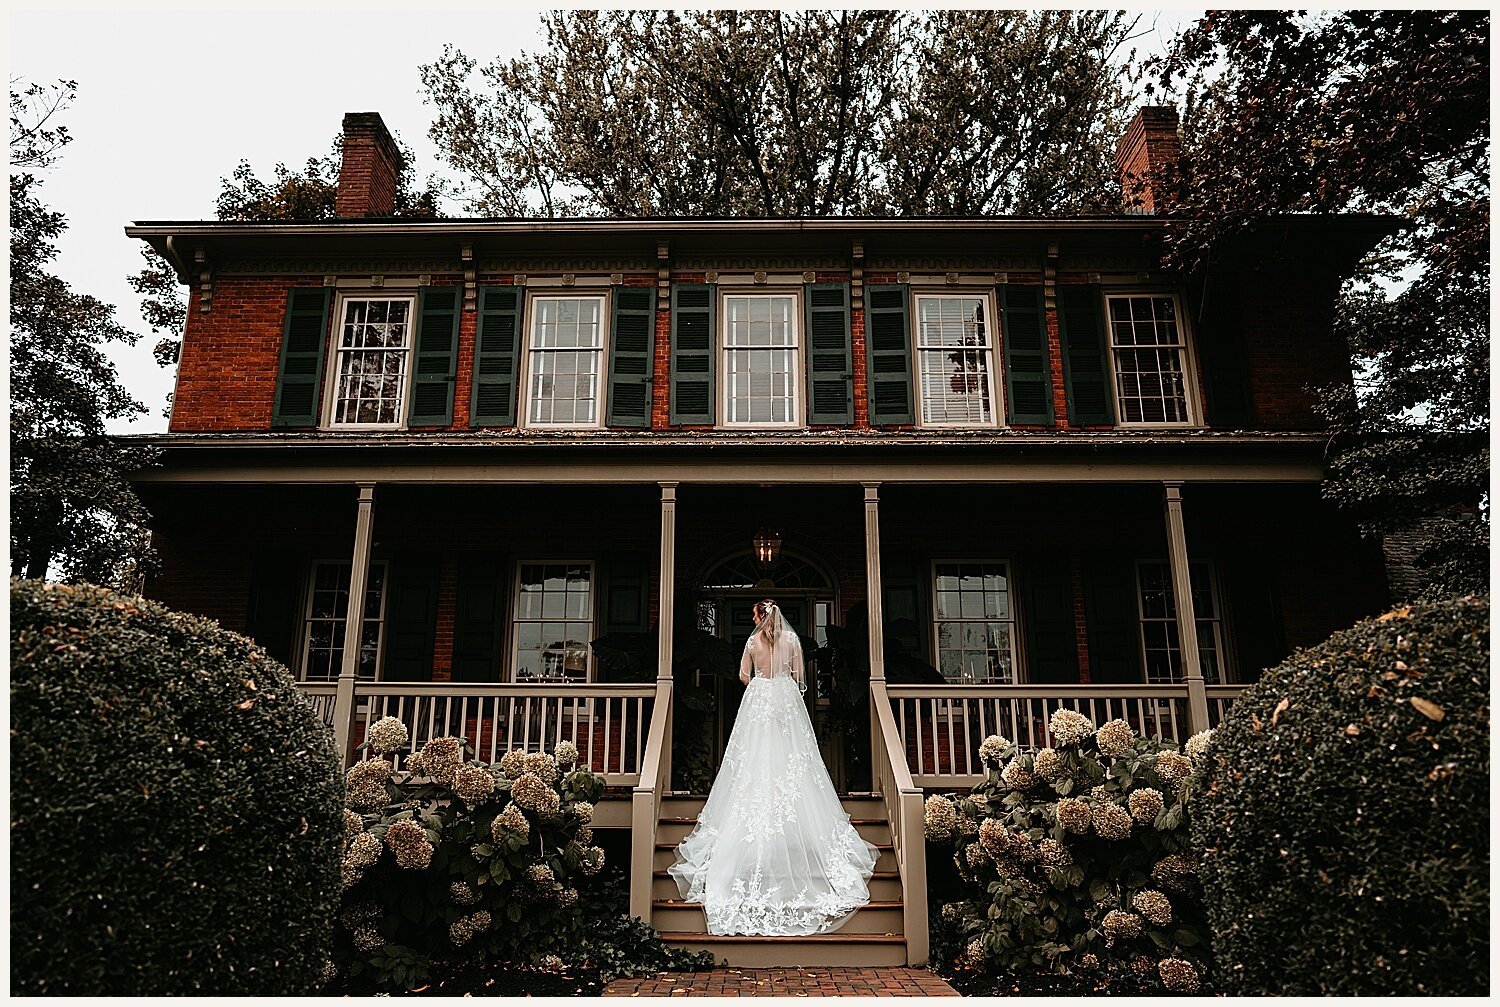 NEPA-lehigh-valley-bloomsburg-wedding-photographer-at-the-cypress-house-new-columbia-pa_0019.jpg